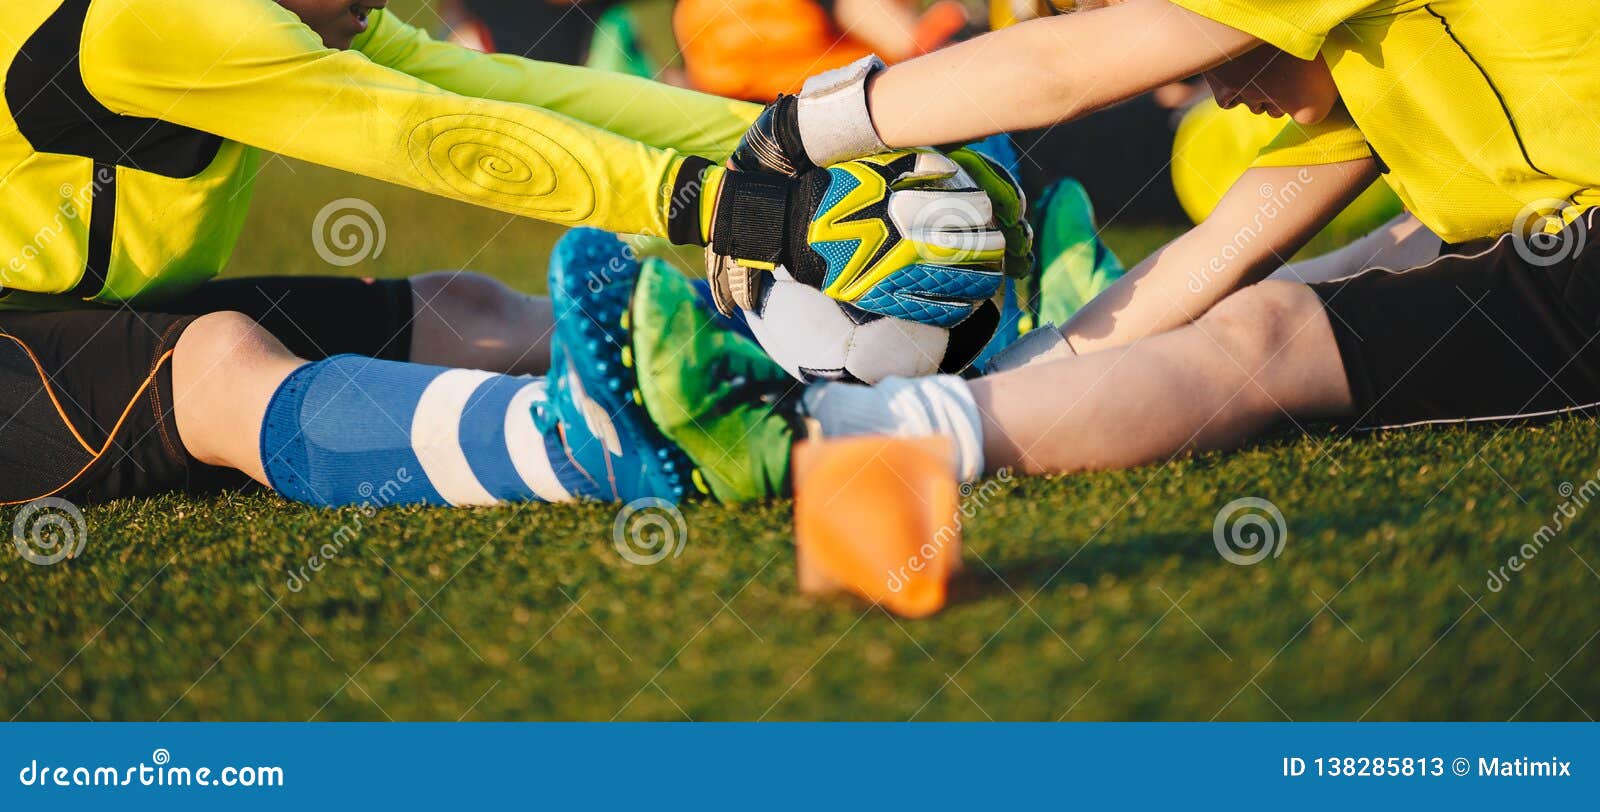 Kids Football Goalkeepers Improving Skills Soccer Training. Soccer Goalkeeper Training Session Stock Image - Image of goal, championship: 138285813